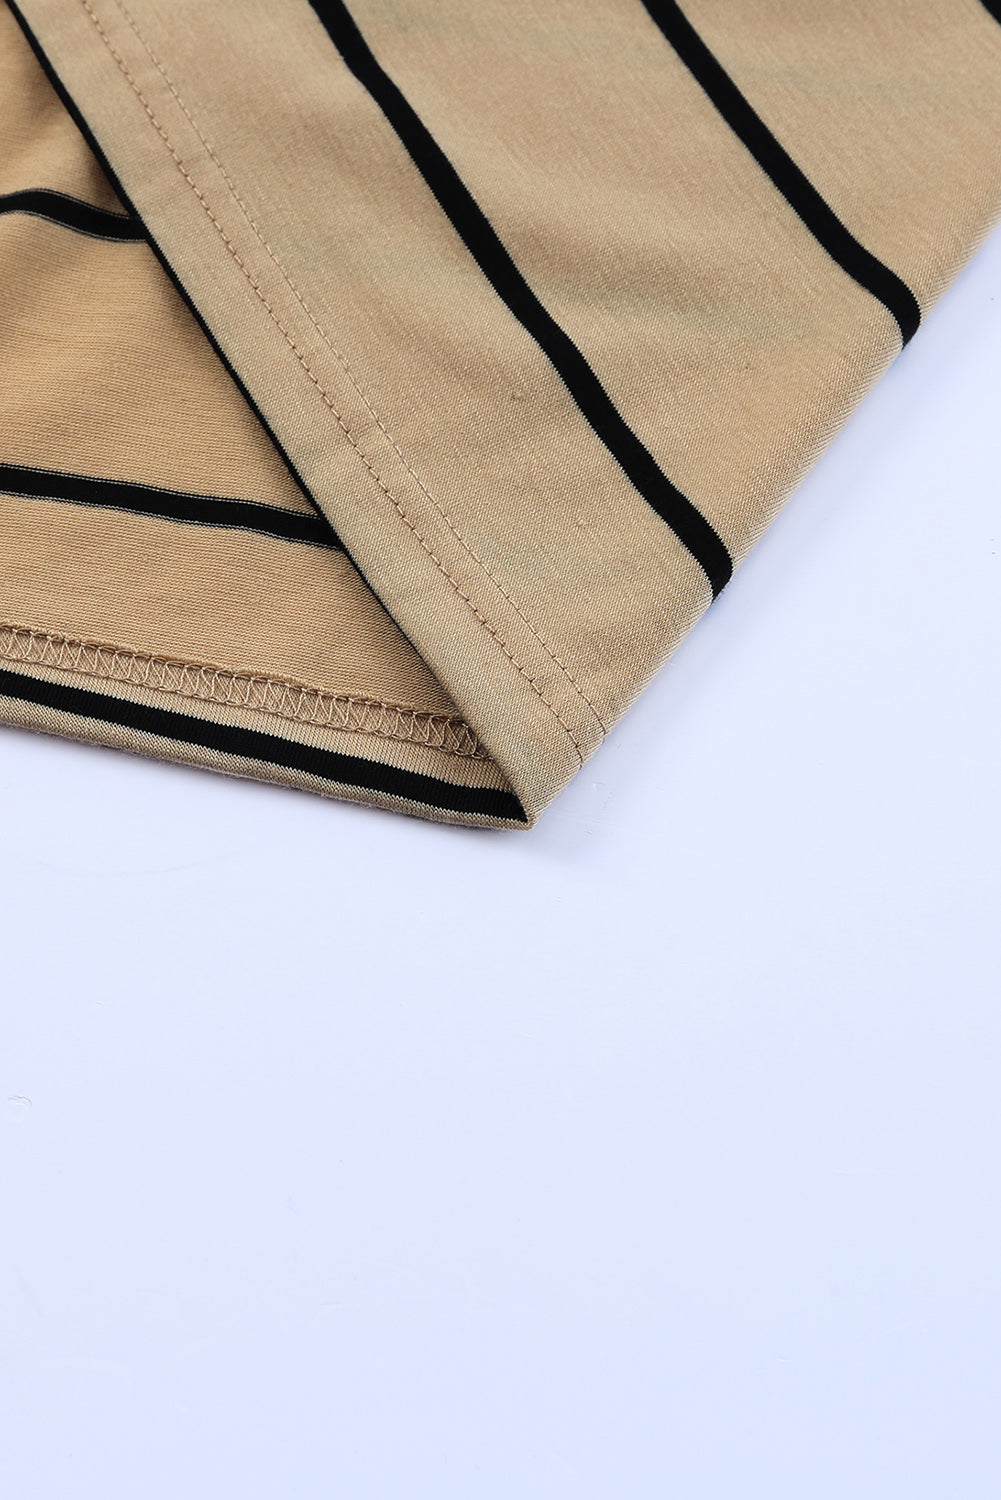 Khaki Striped Backless Casual Side Slits Maxi Dress